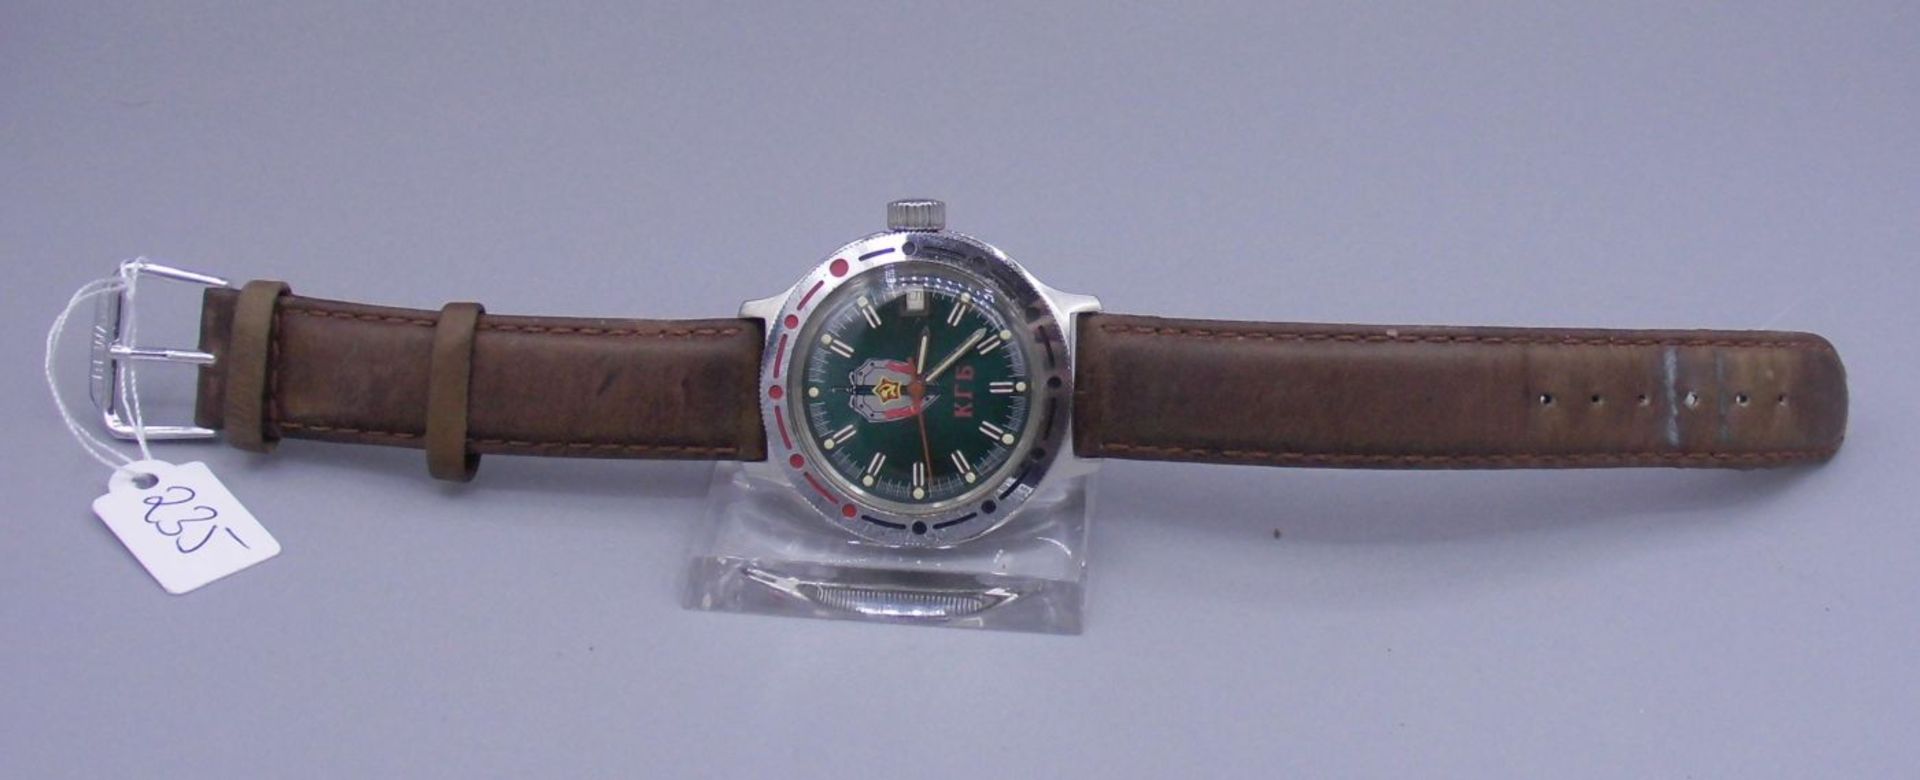 VINTAGE ARMBANDUHR / TAUCHERUHR / RUSSISCHE UHR: AMPHIBIA / wristwatch, Automatik-Uhr, AMPHIBIA " - Image 2 of 5